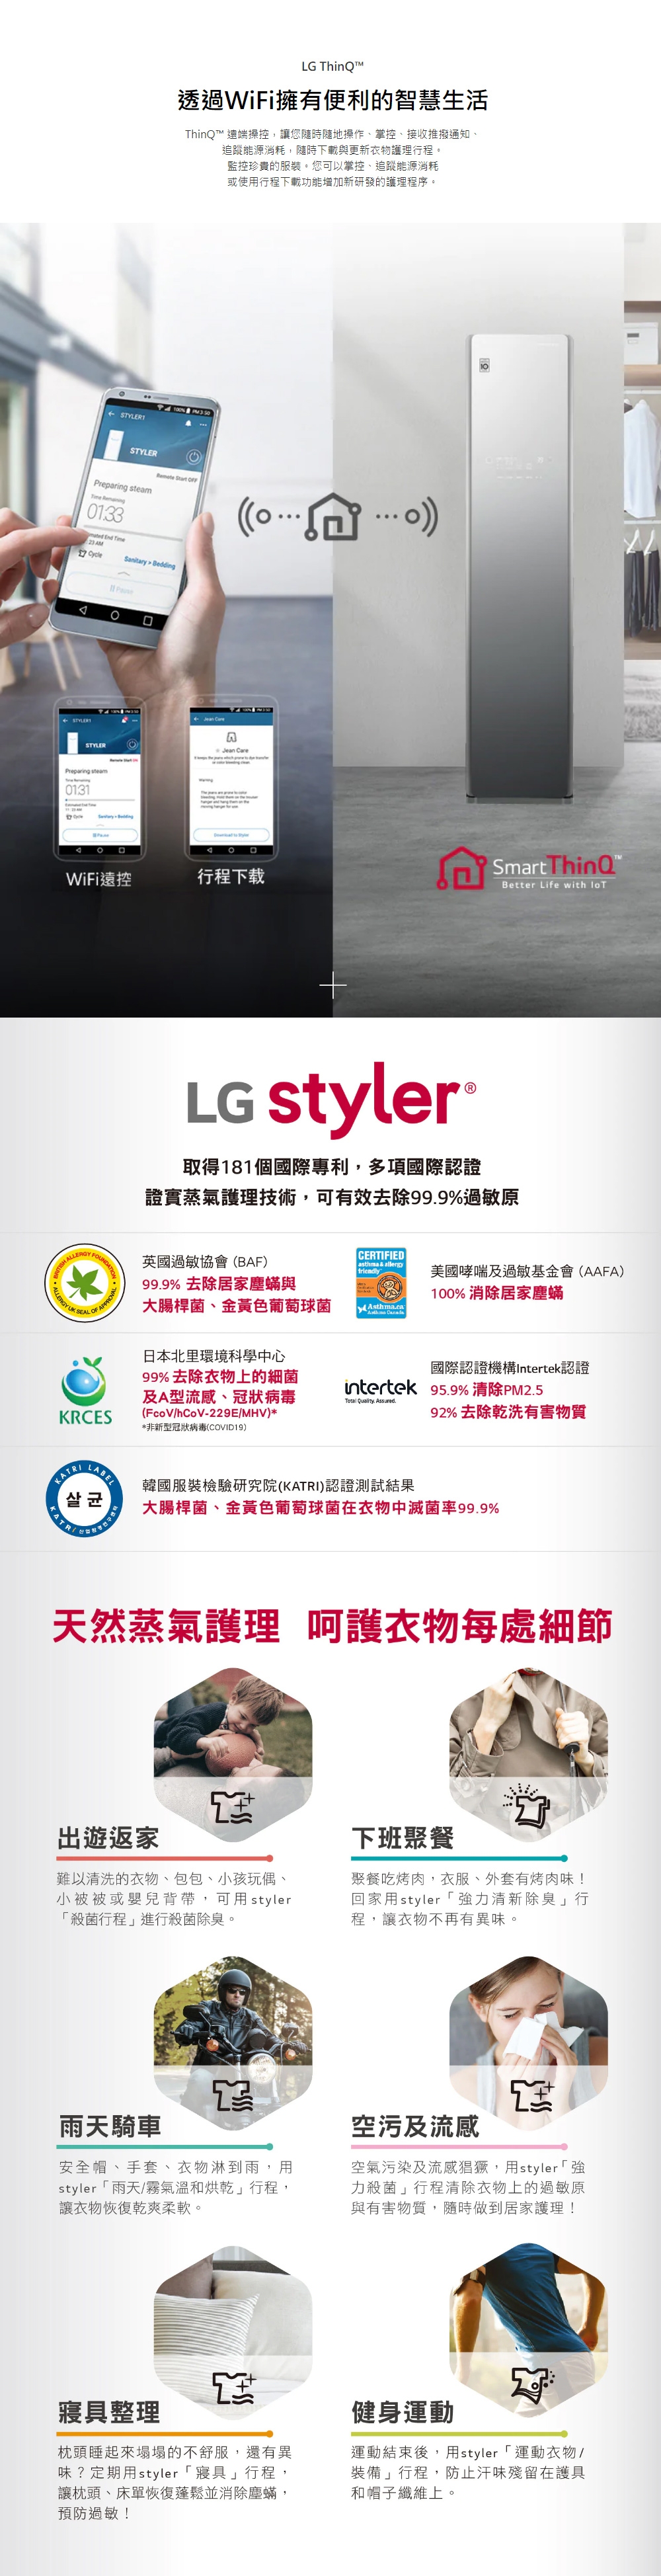 LG樂金WiFi Styler蒸氣電子衣櫥 E523IR 亞麻紋象牙白 另有 E523FR E523MR B723MR